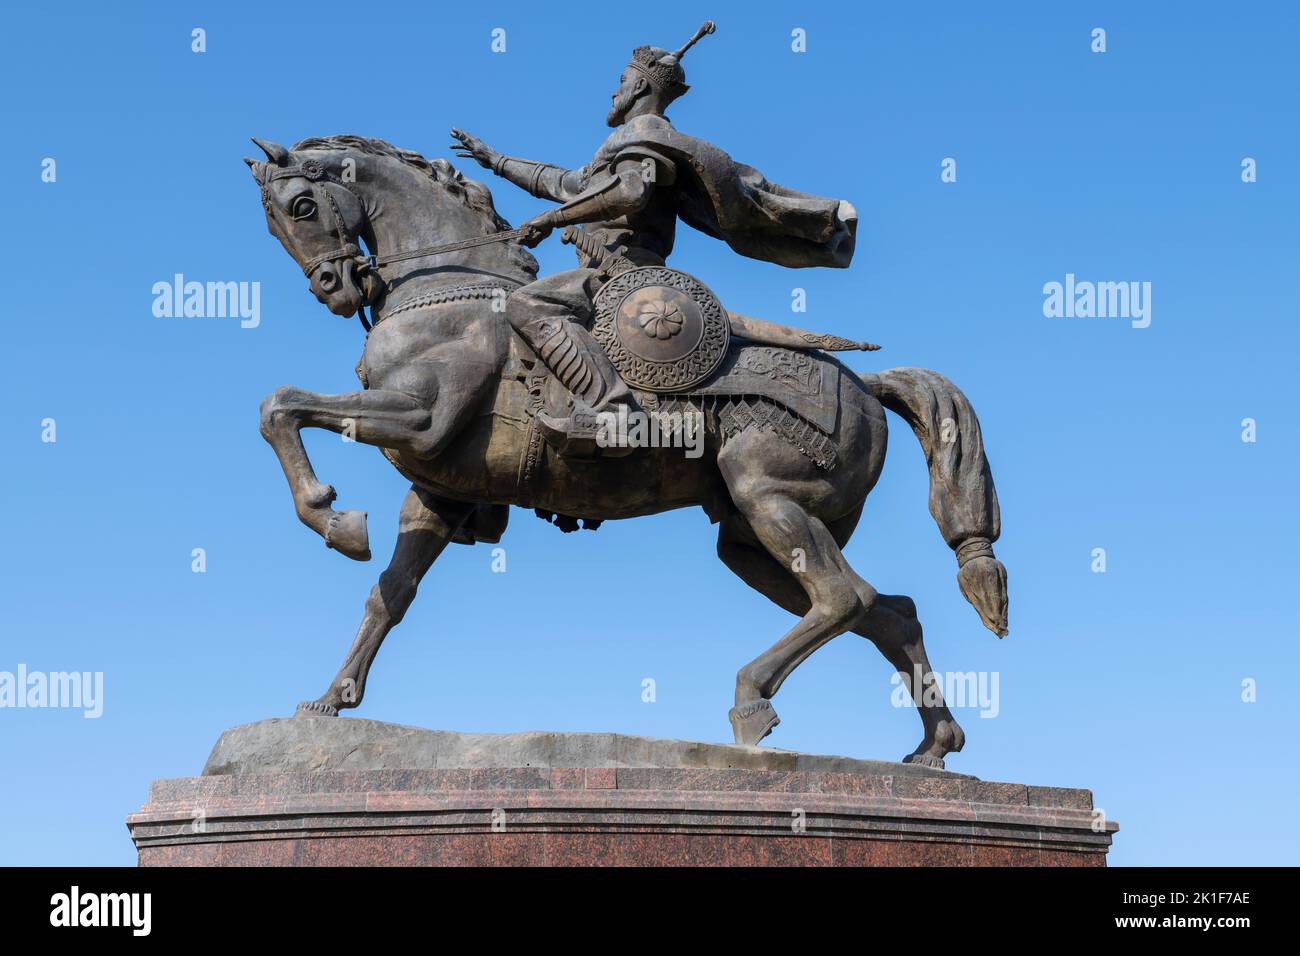 TASHKENT, UZBEKISTAN - SEPTEMBER 15, 2022: Monument to Amir Temur (Tamerlane) close-up against a blue cloudless sky Stock Photo